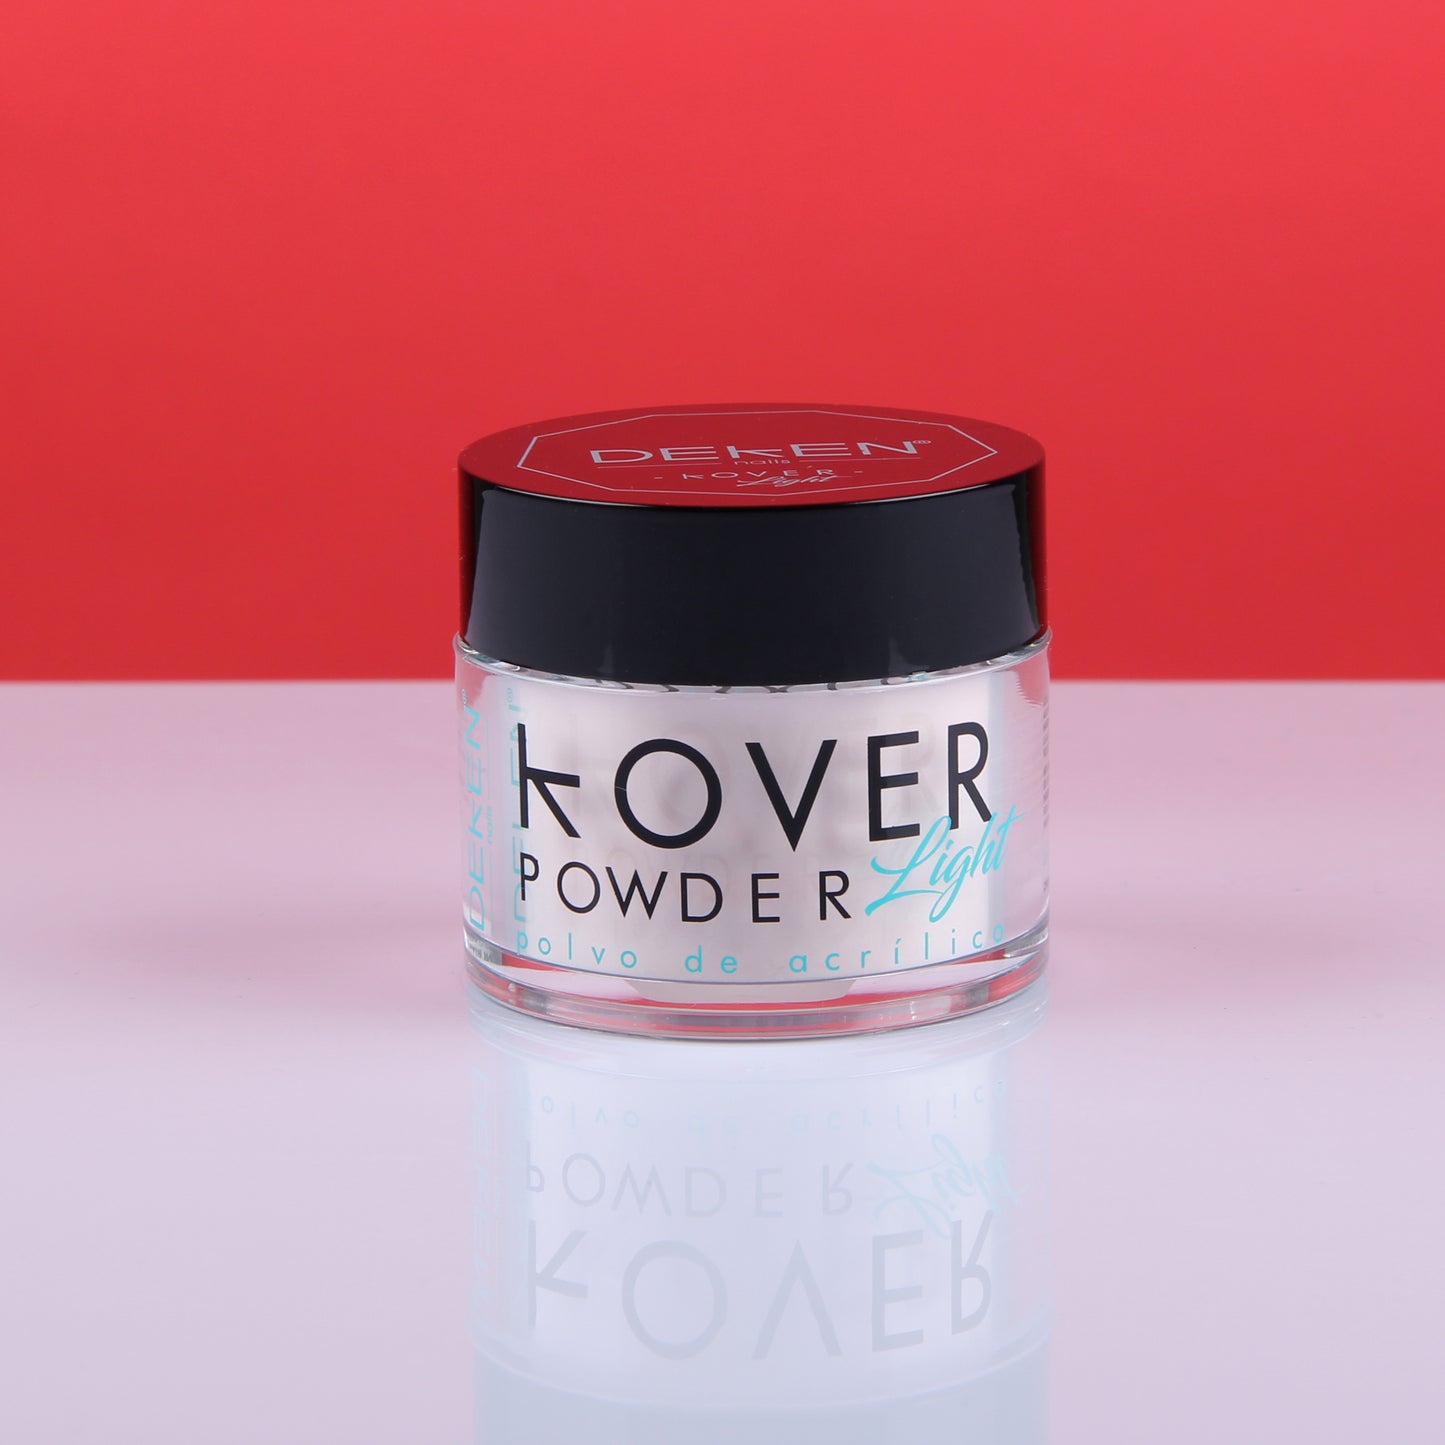 Acrylic Powder Kover Light